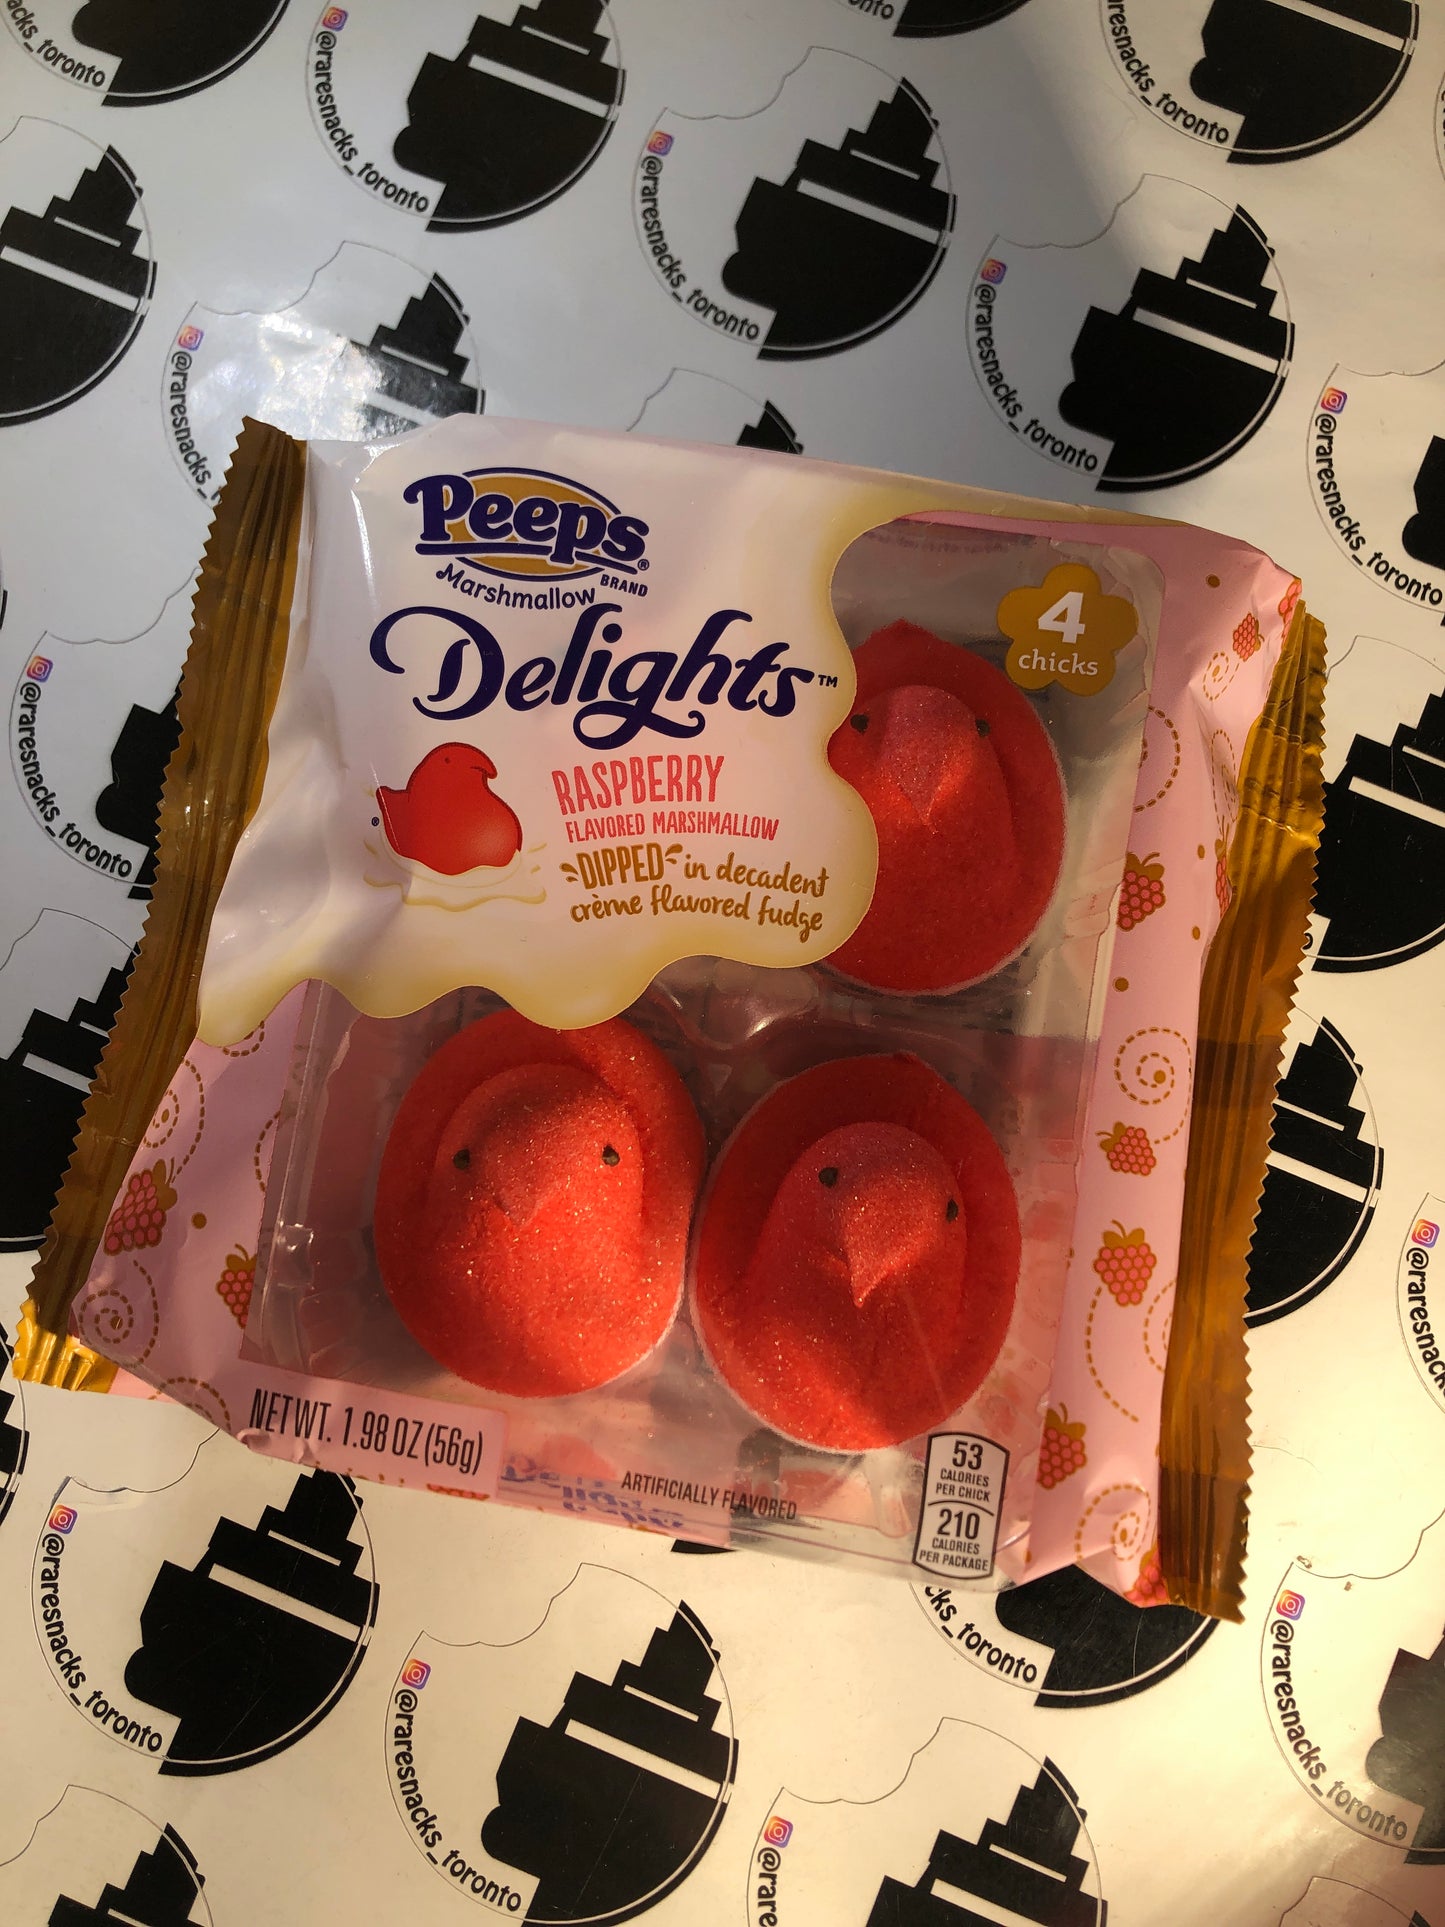 Peeps Delights Raspberry dipped in fudge